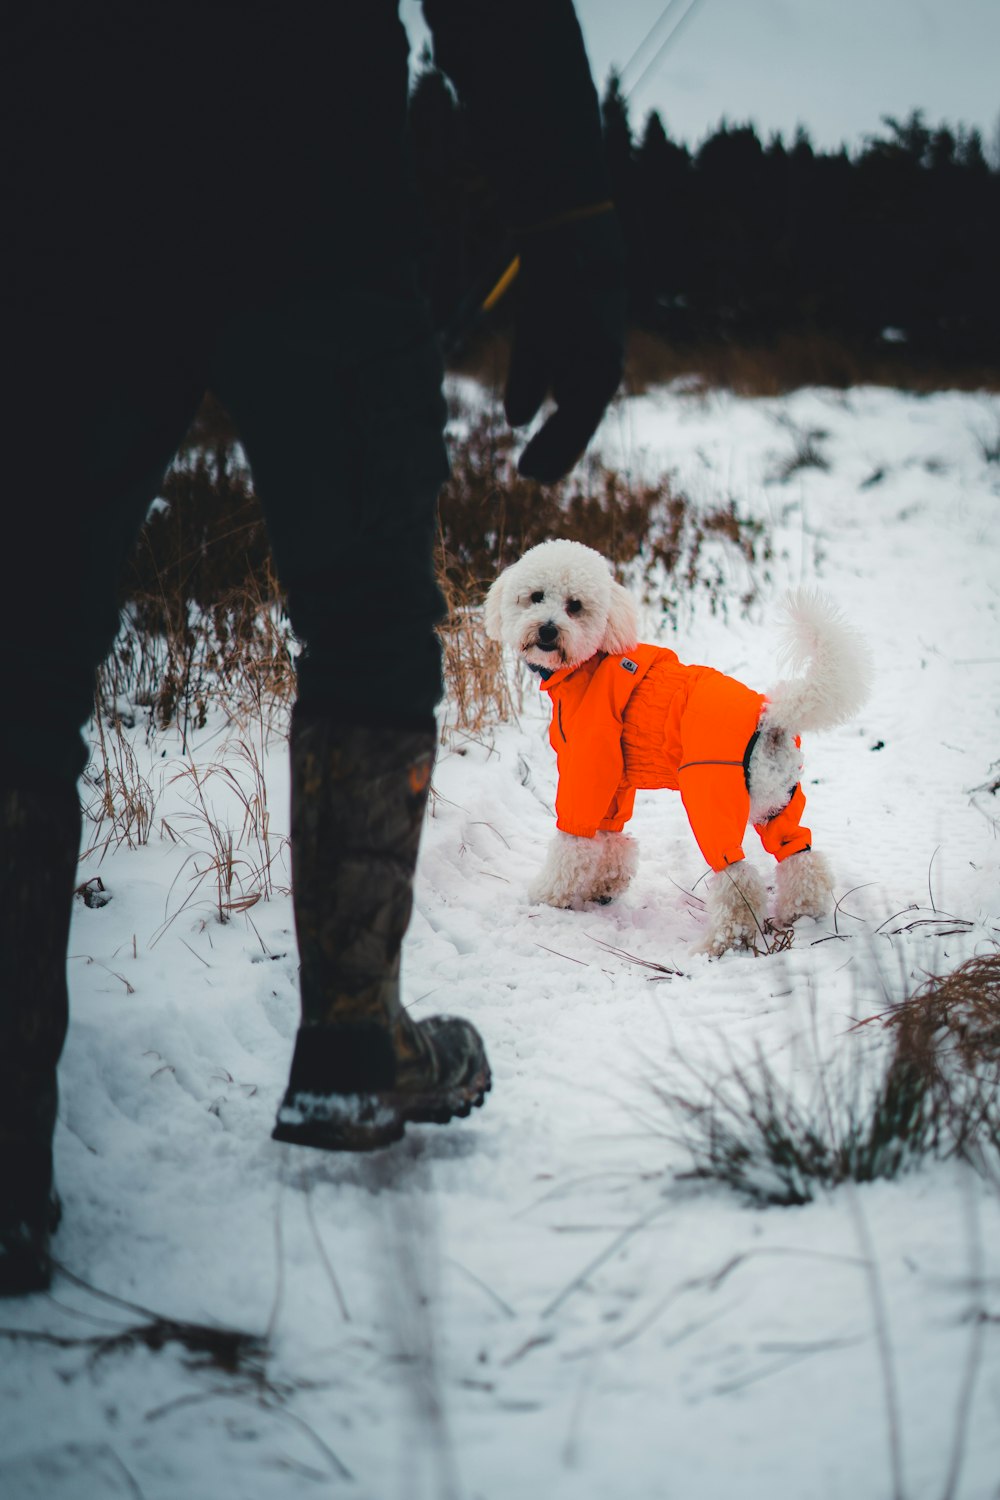 a small white dog wearing an orange jacket